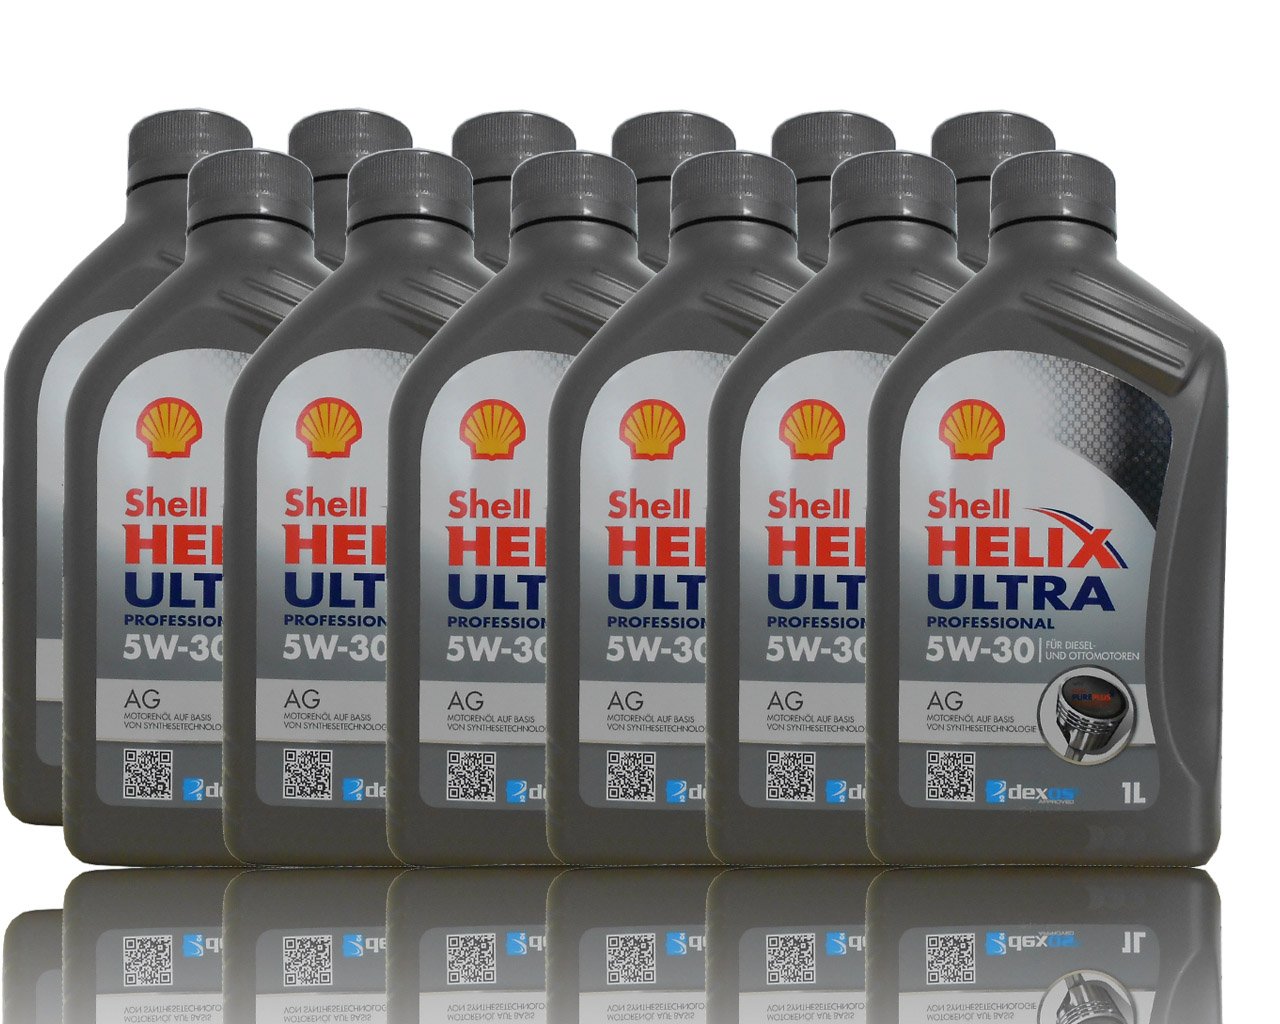 Shell Helix Ultra Professional AG 5W-30 12x1 Liter von Shell